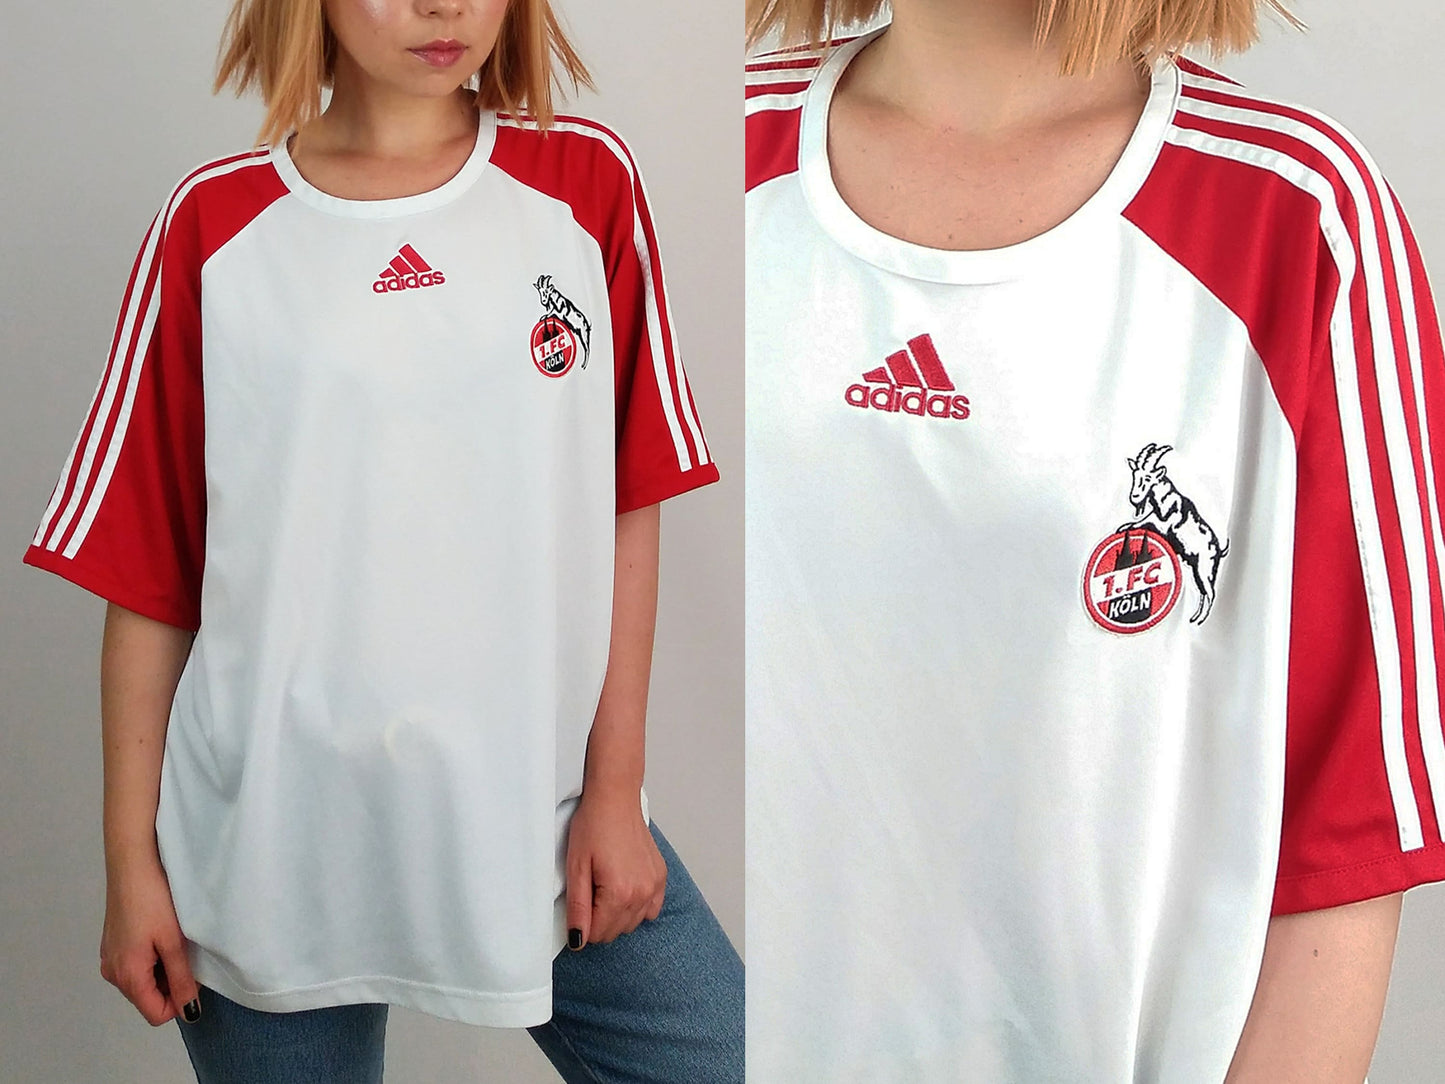 ADIDAS Unisex Football T-shirt Koln Team - size L